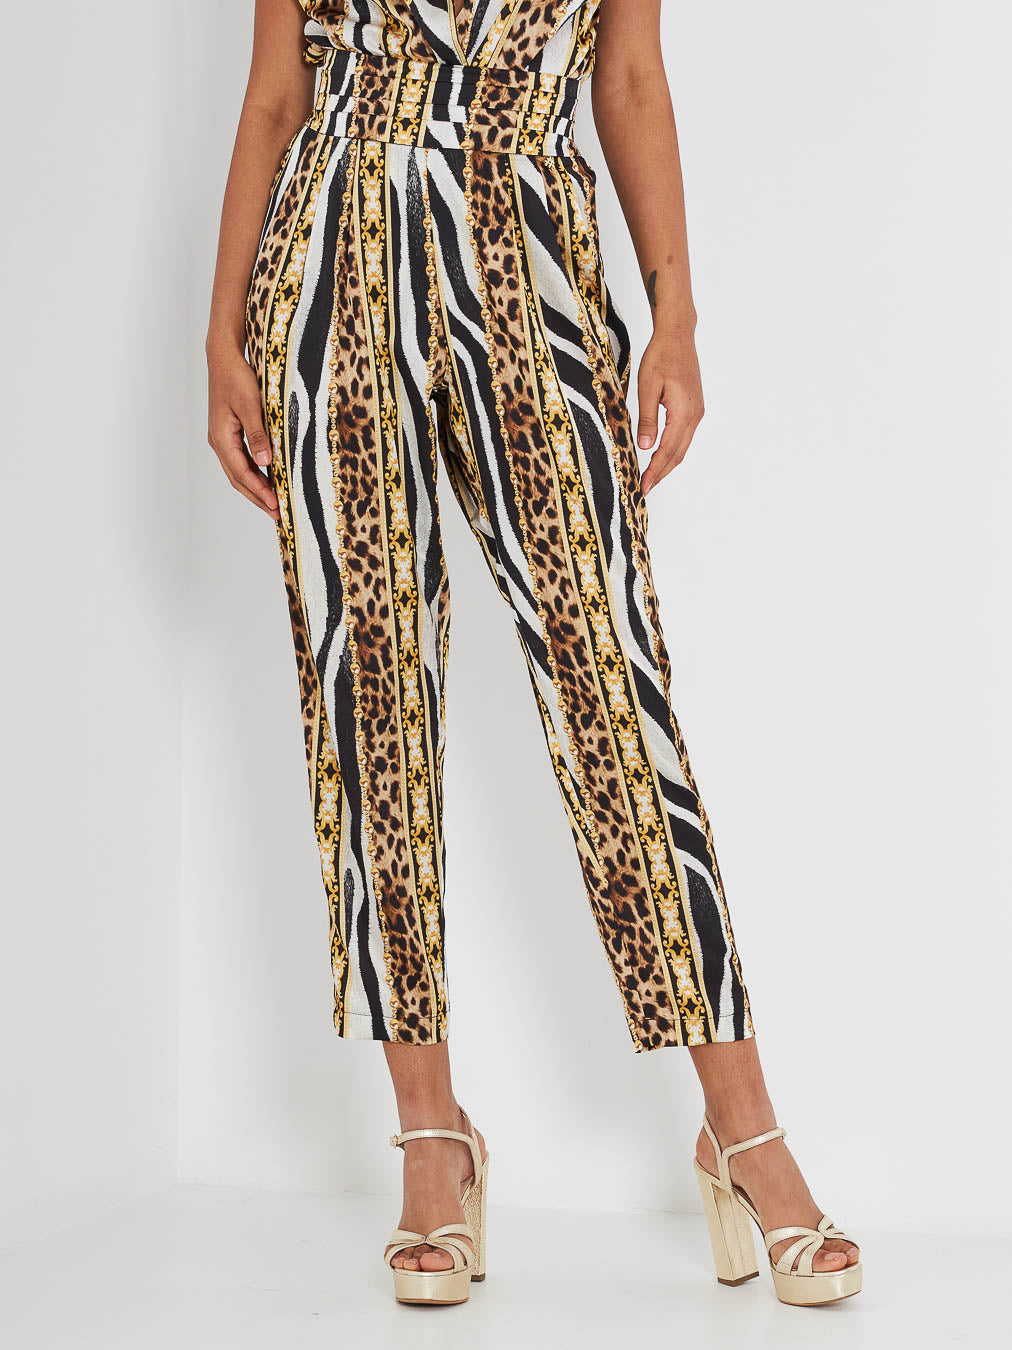 S#it laminated jungle pattern trousers